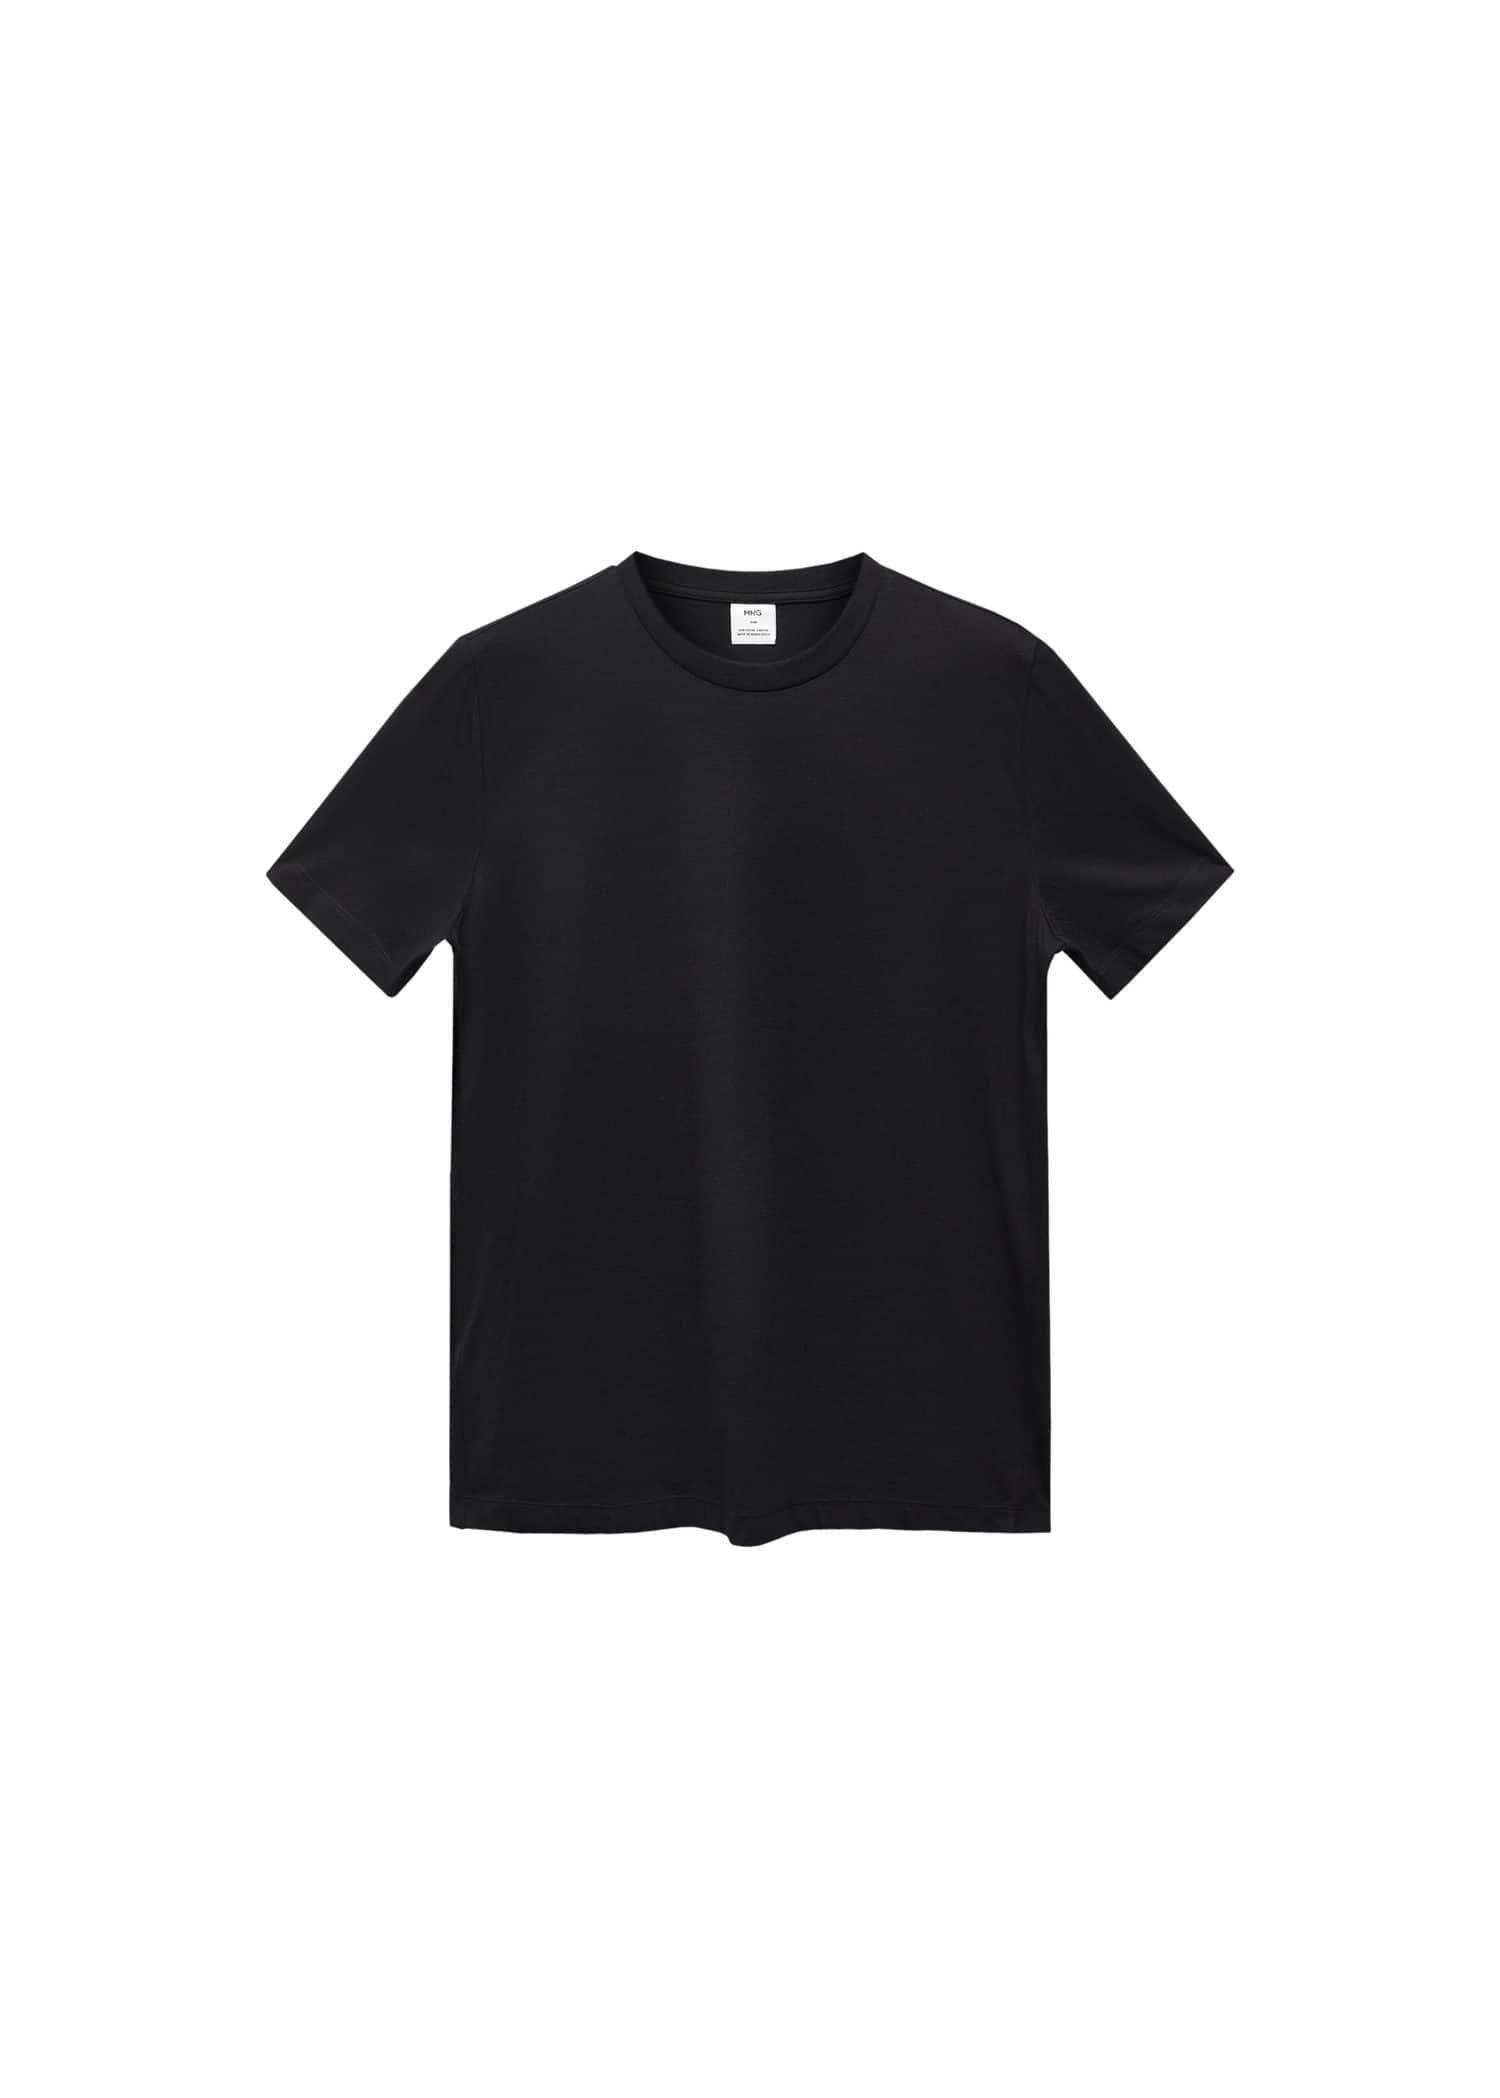 Mango - Black Basic Cotton Stretch T-Shirt